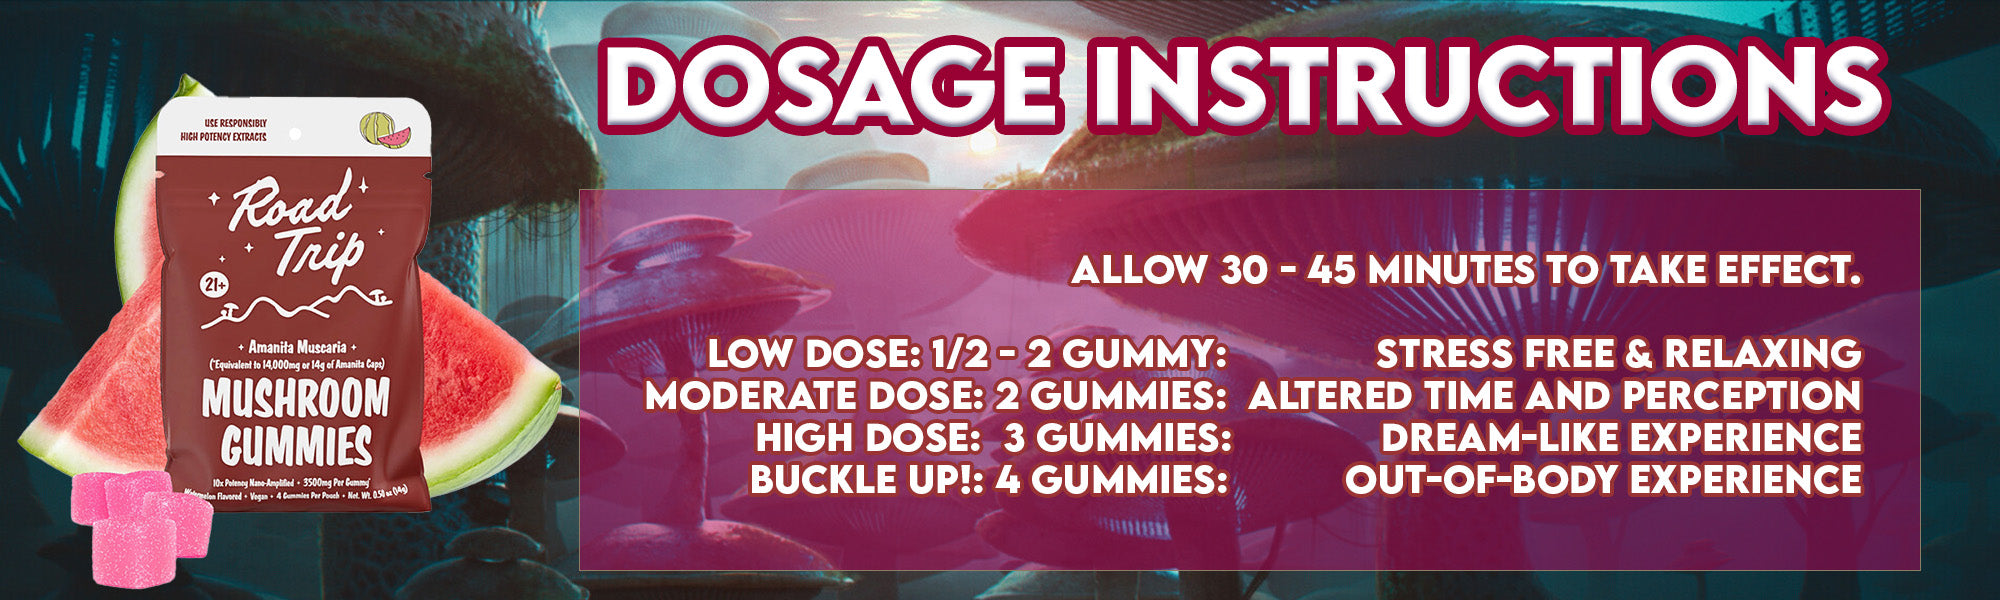 Dosage instructions for Road Trip Amanita Mushroom Gummies